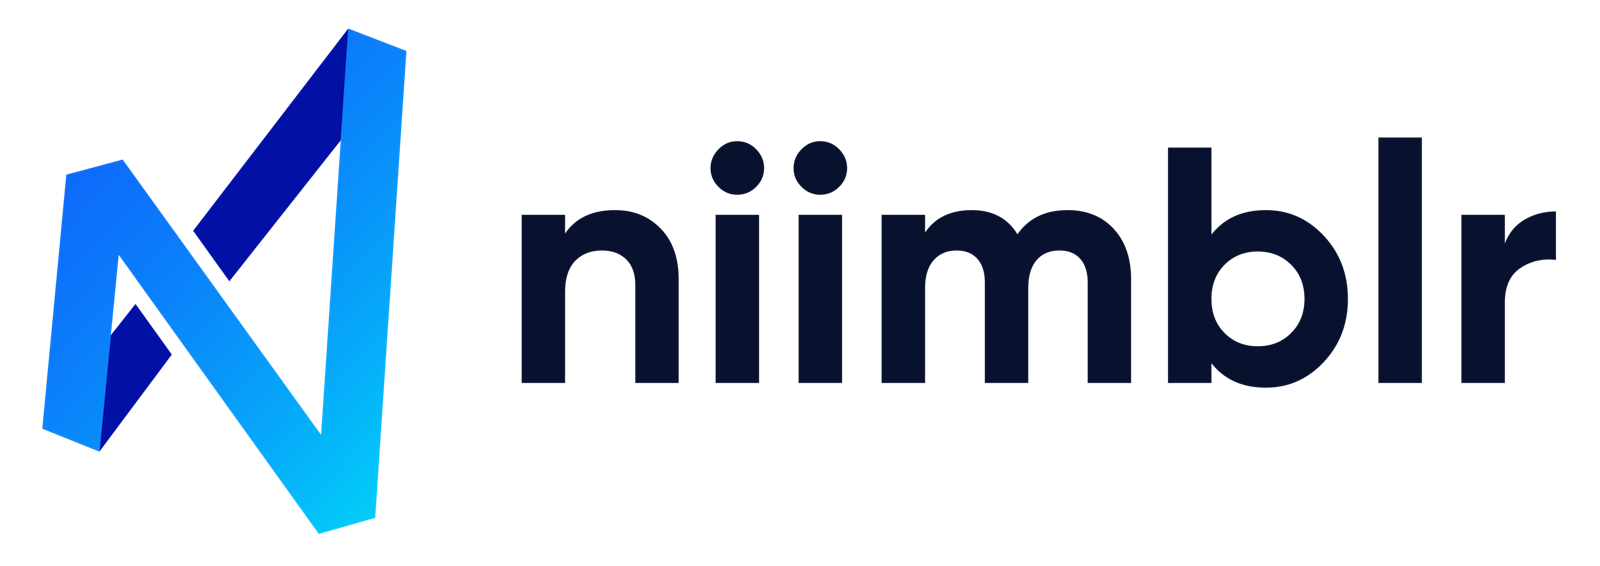 Niimblr_logo